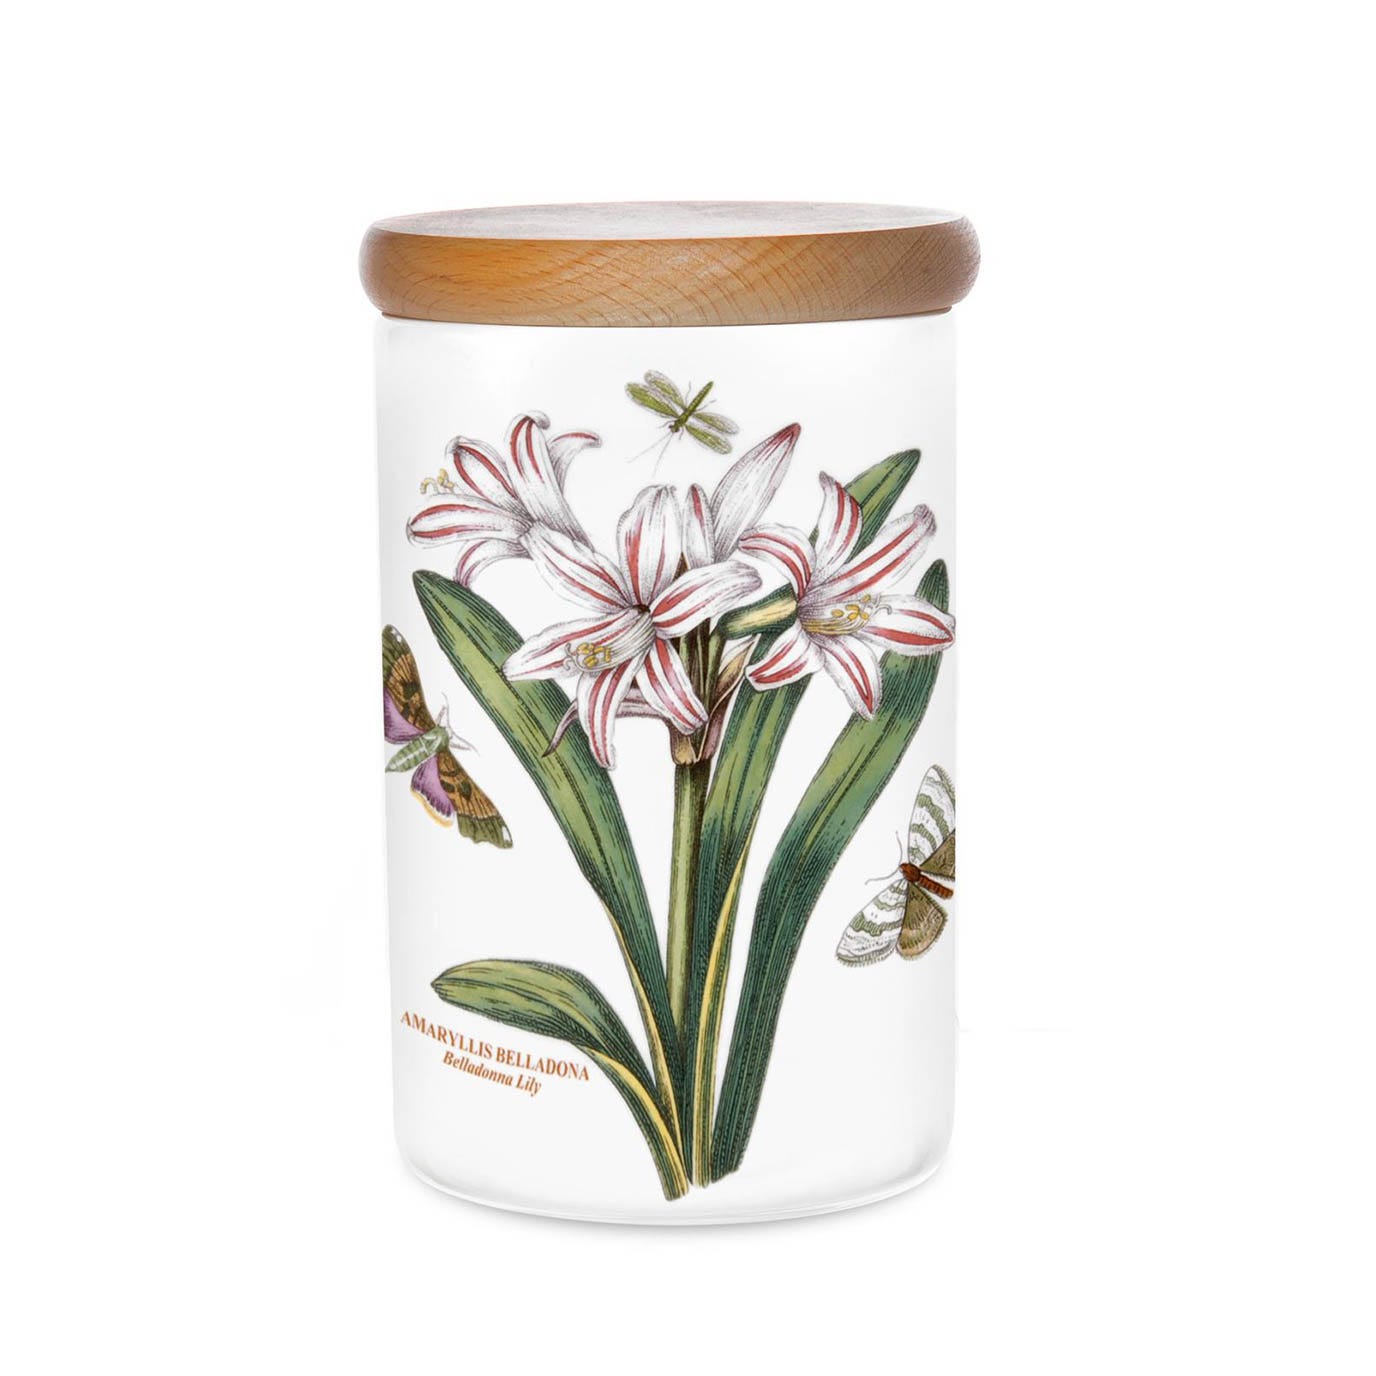 Botanic Garden Belladonna Lily Jar, 18cm